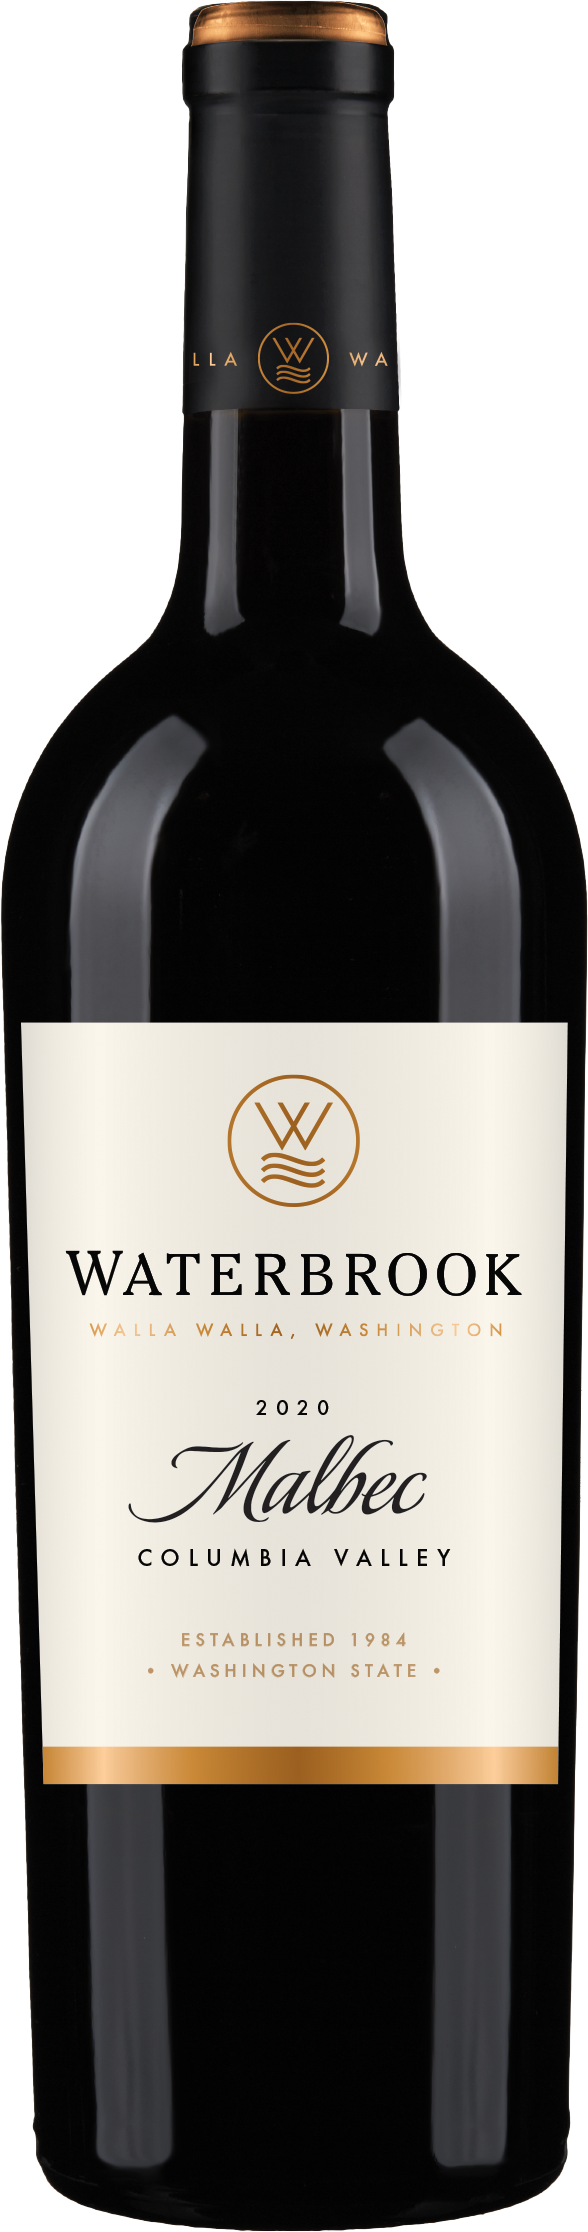 Waterbrook 2020 Malbec